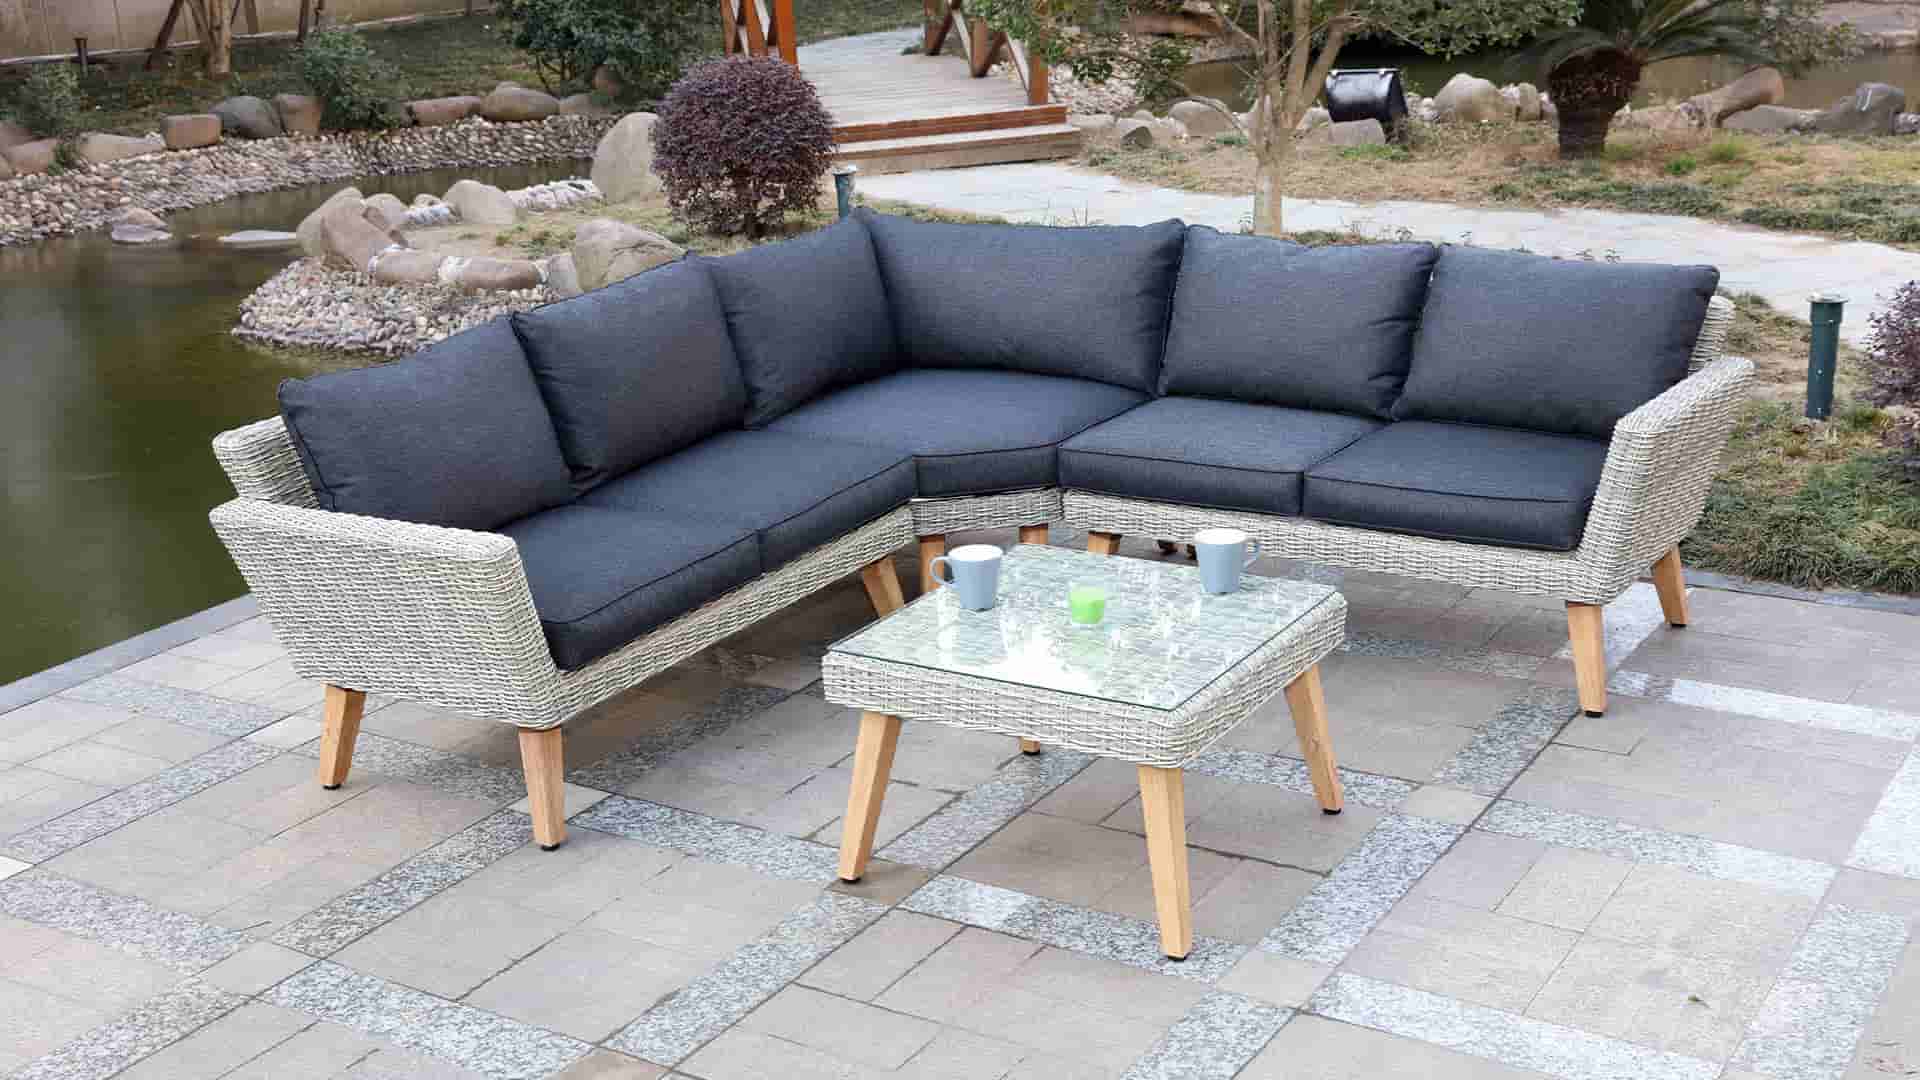 New Garden Furniture - Rattan - Cushions - Garden - Outdoors - Comfort - Summer - Outdoor - Aluminium - Steptoes - Furniture - Paphos - Cyprus 1